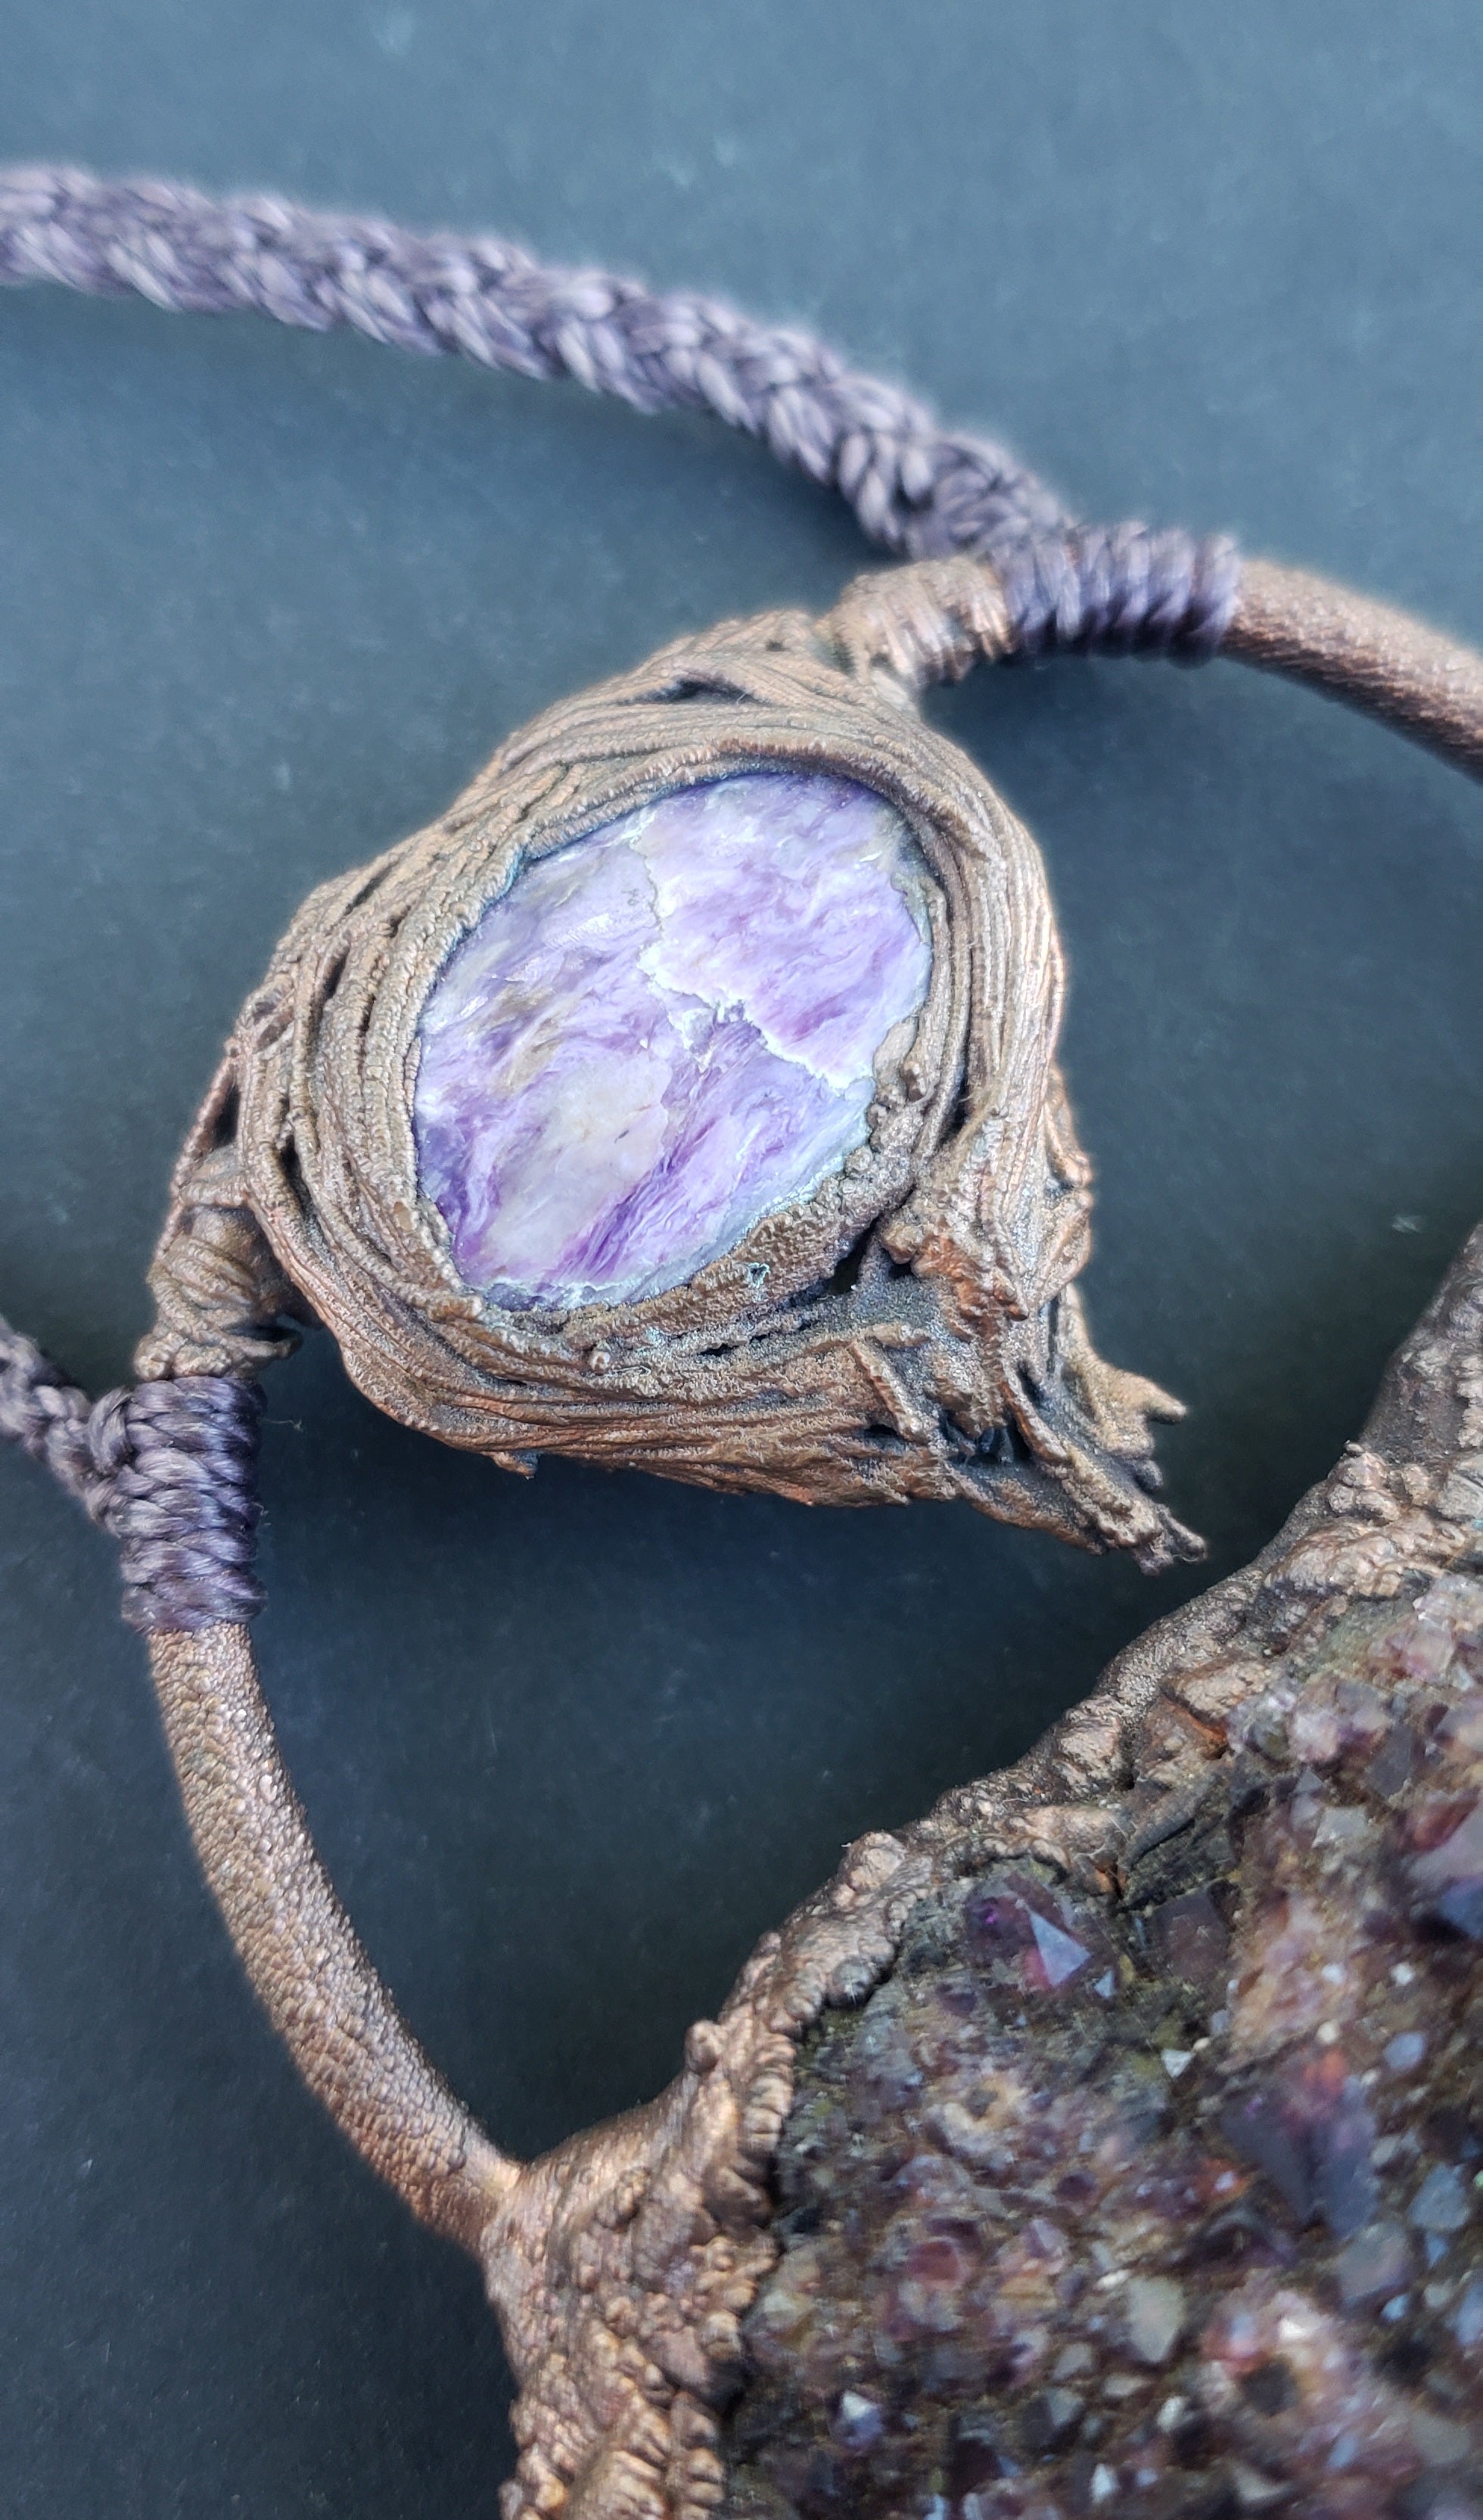 Spirit quartz cluster + chaorite epic copper master piece necklace